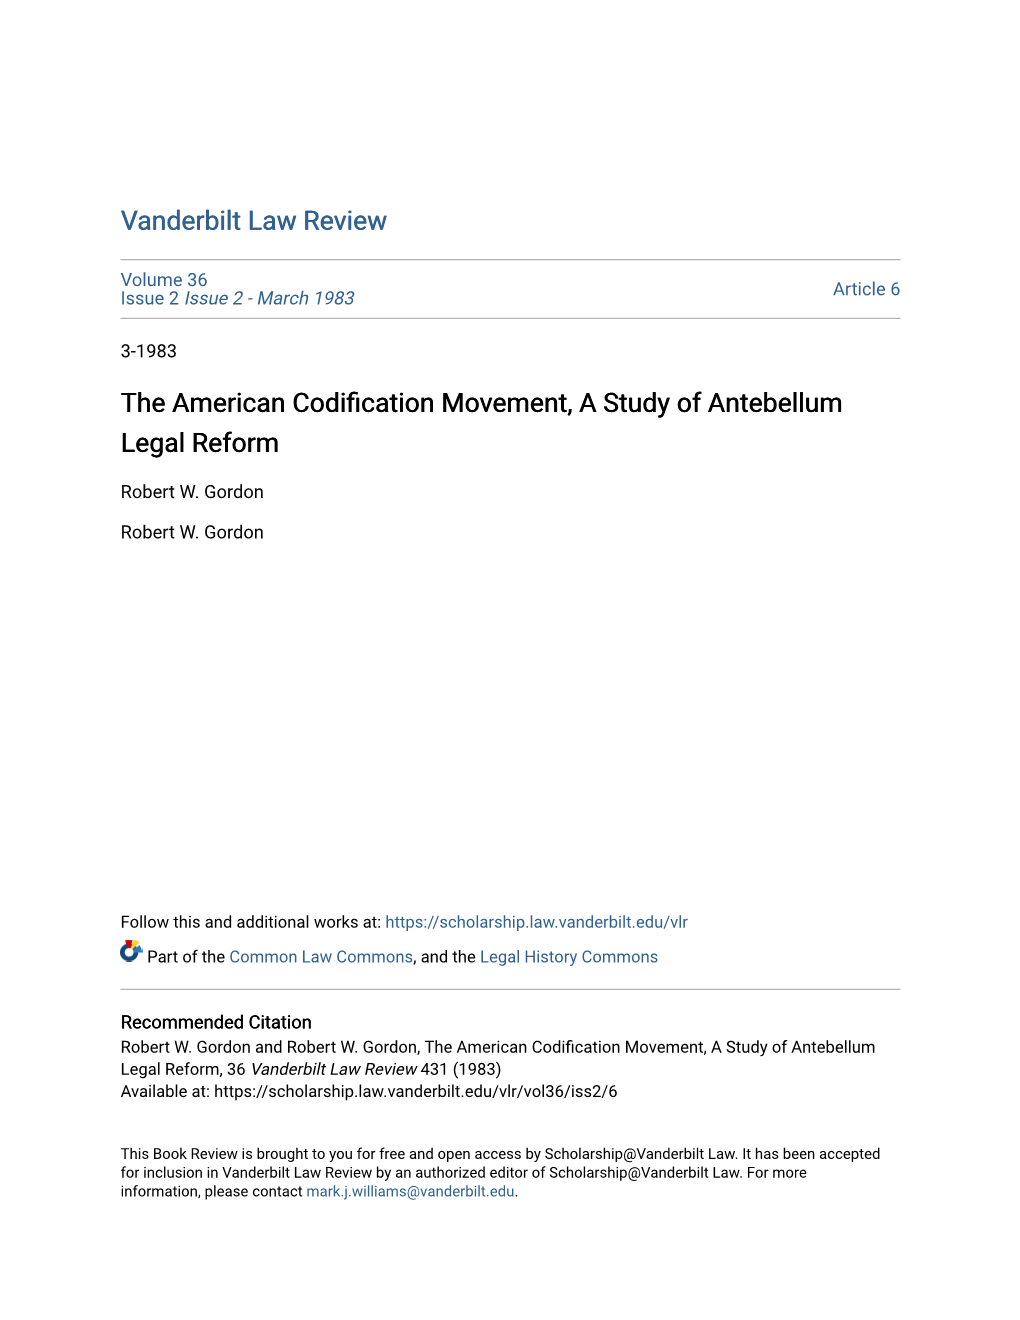 The American Codification Movement, a Study of Antebellum Legal Reform